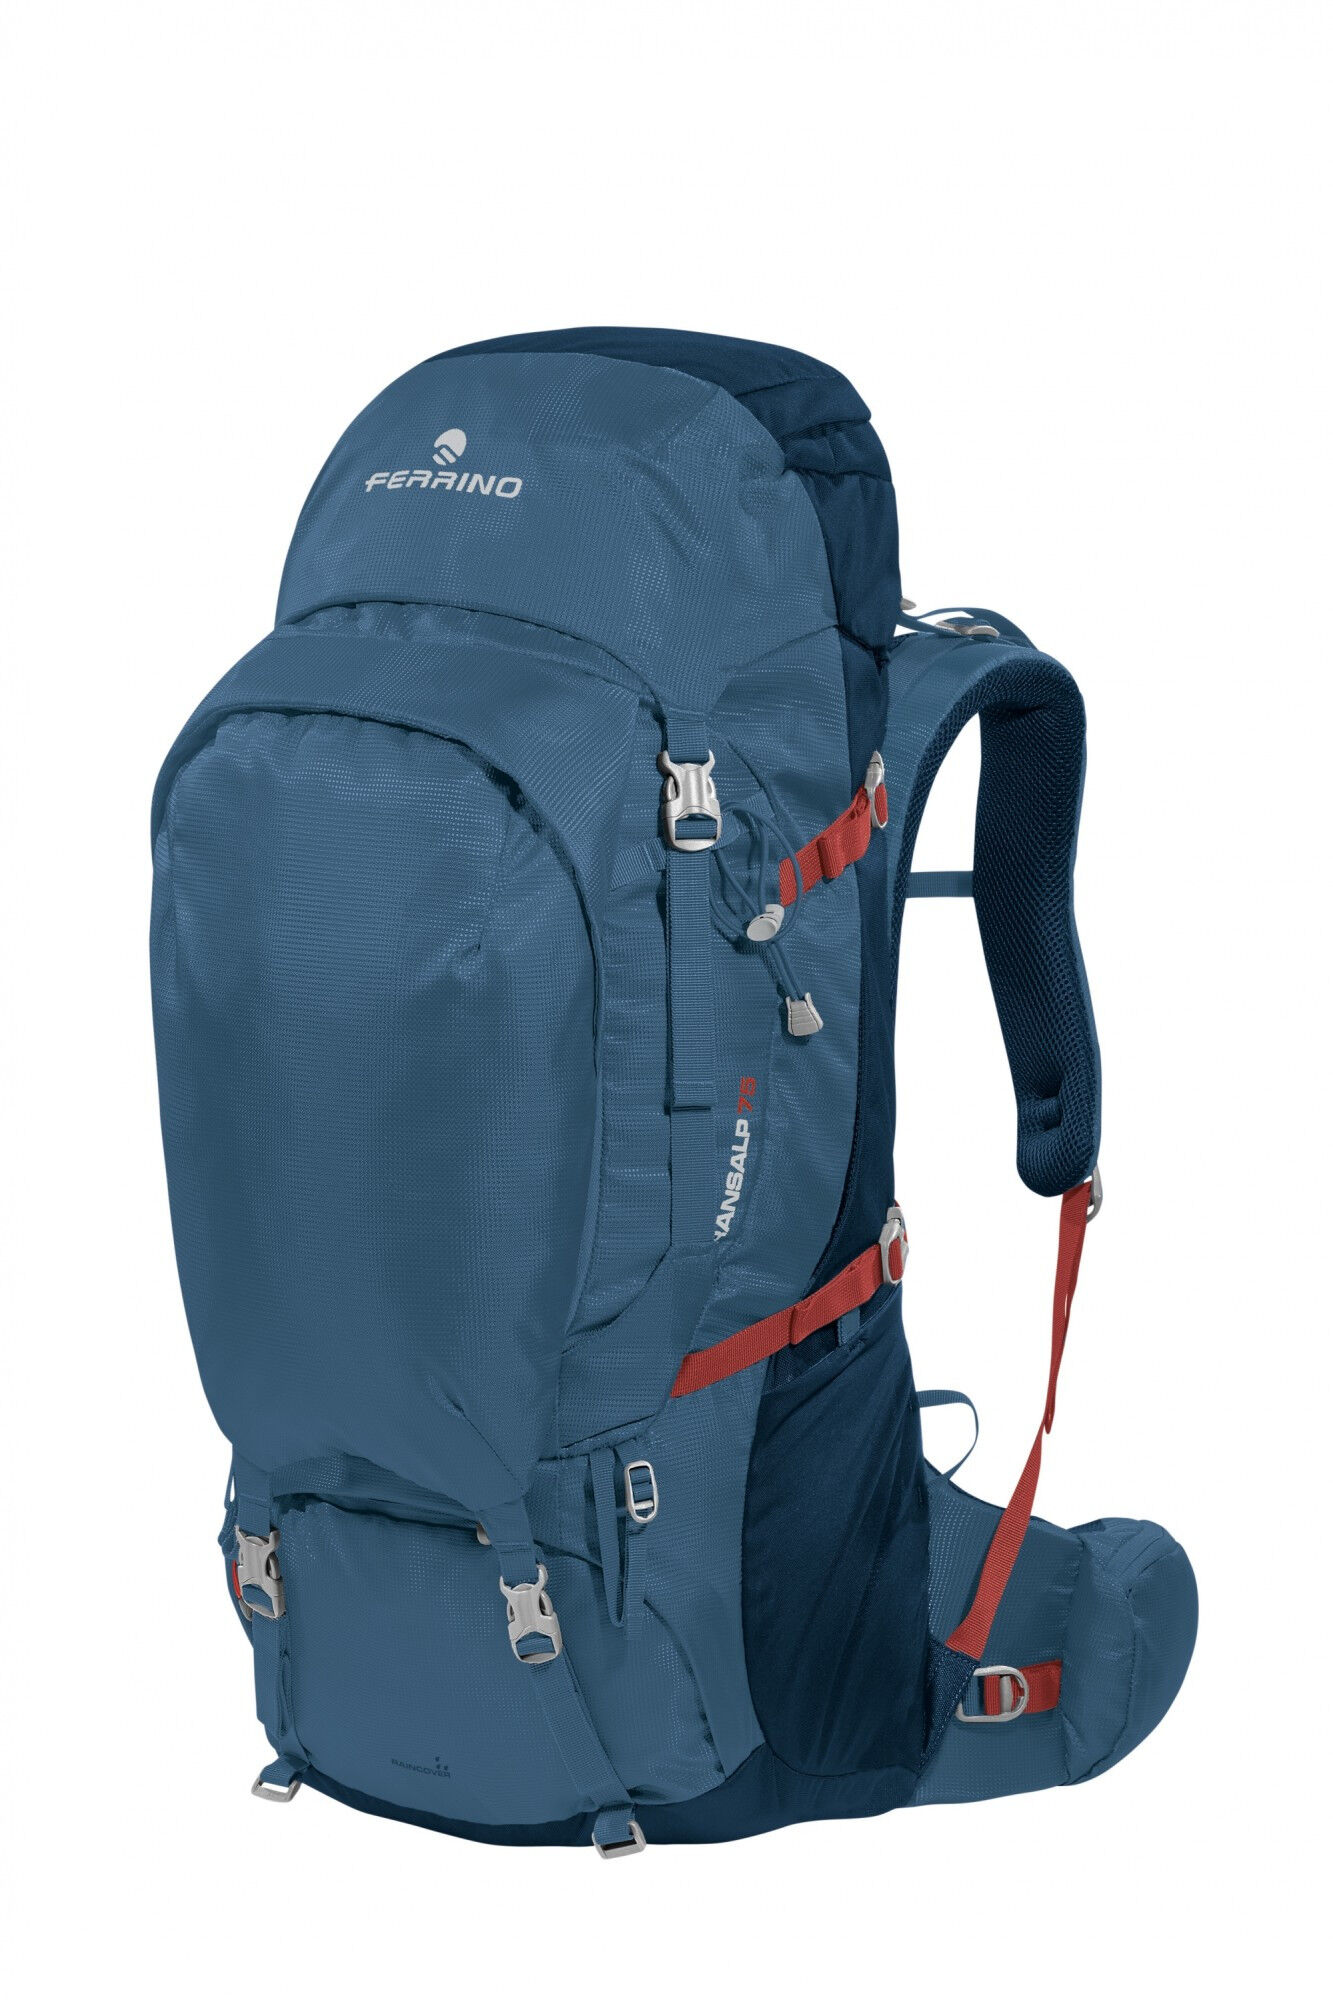 Ferrino Transalp 75 - Hiking backpack